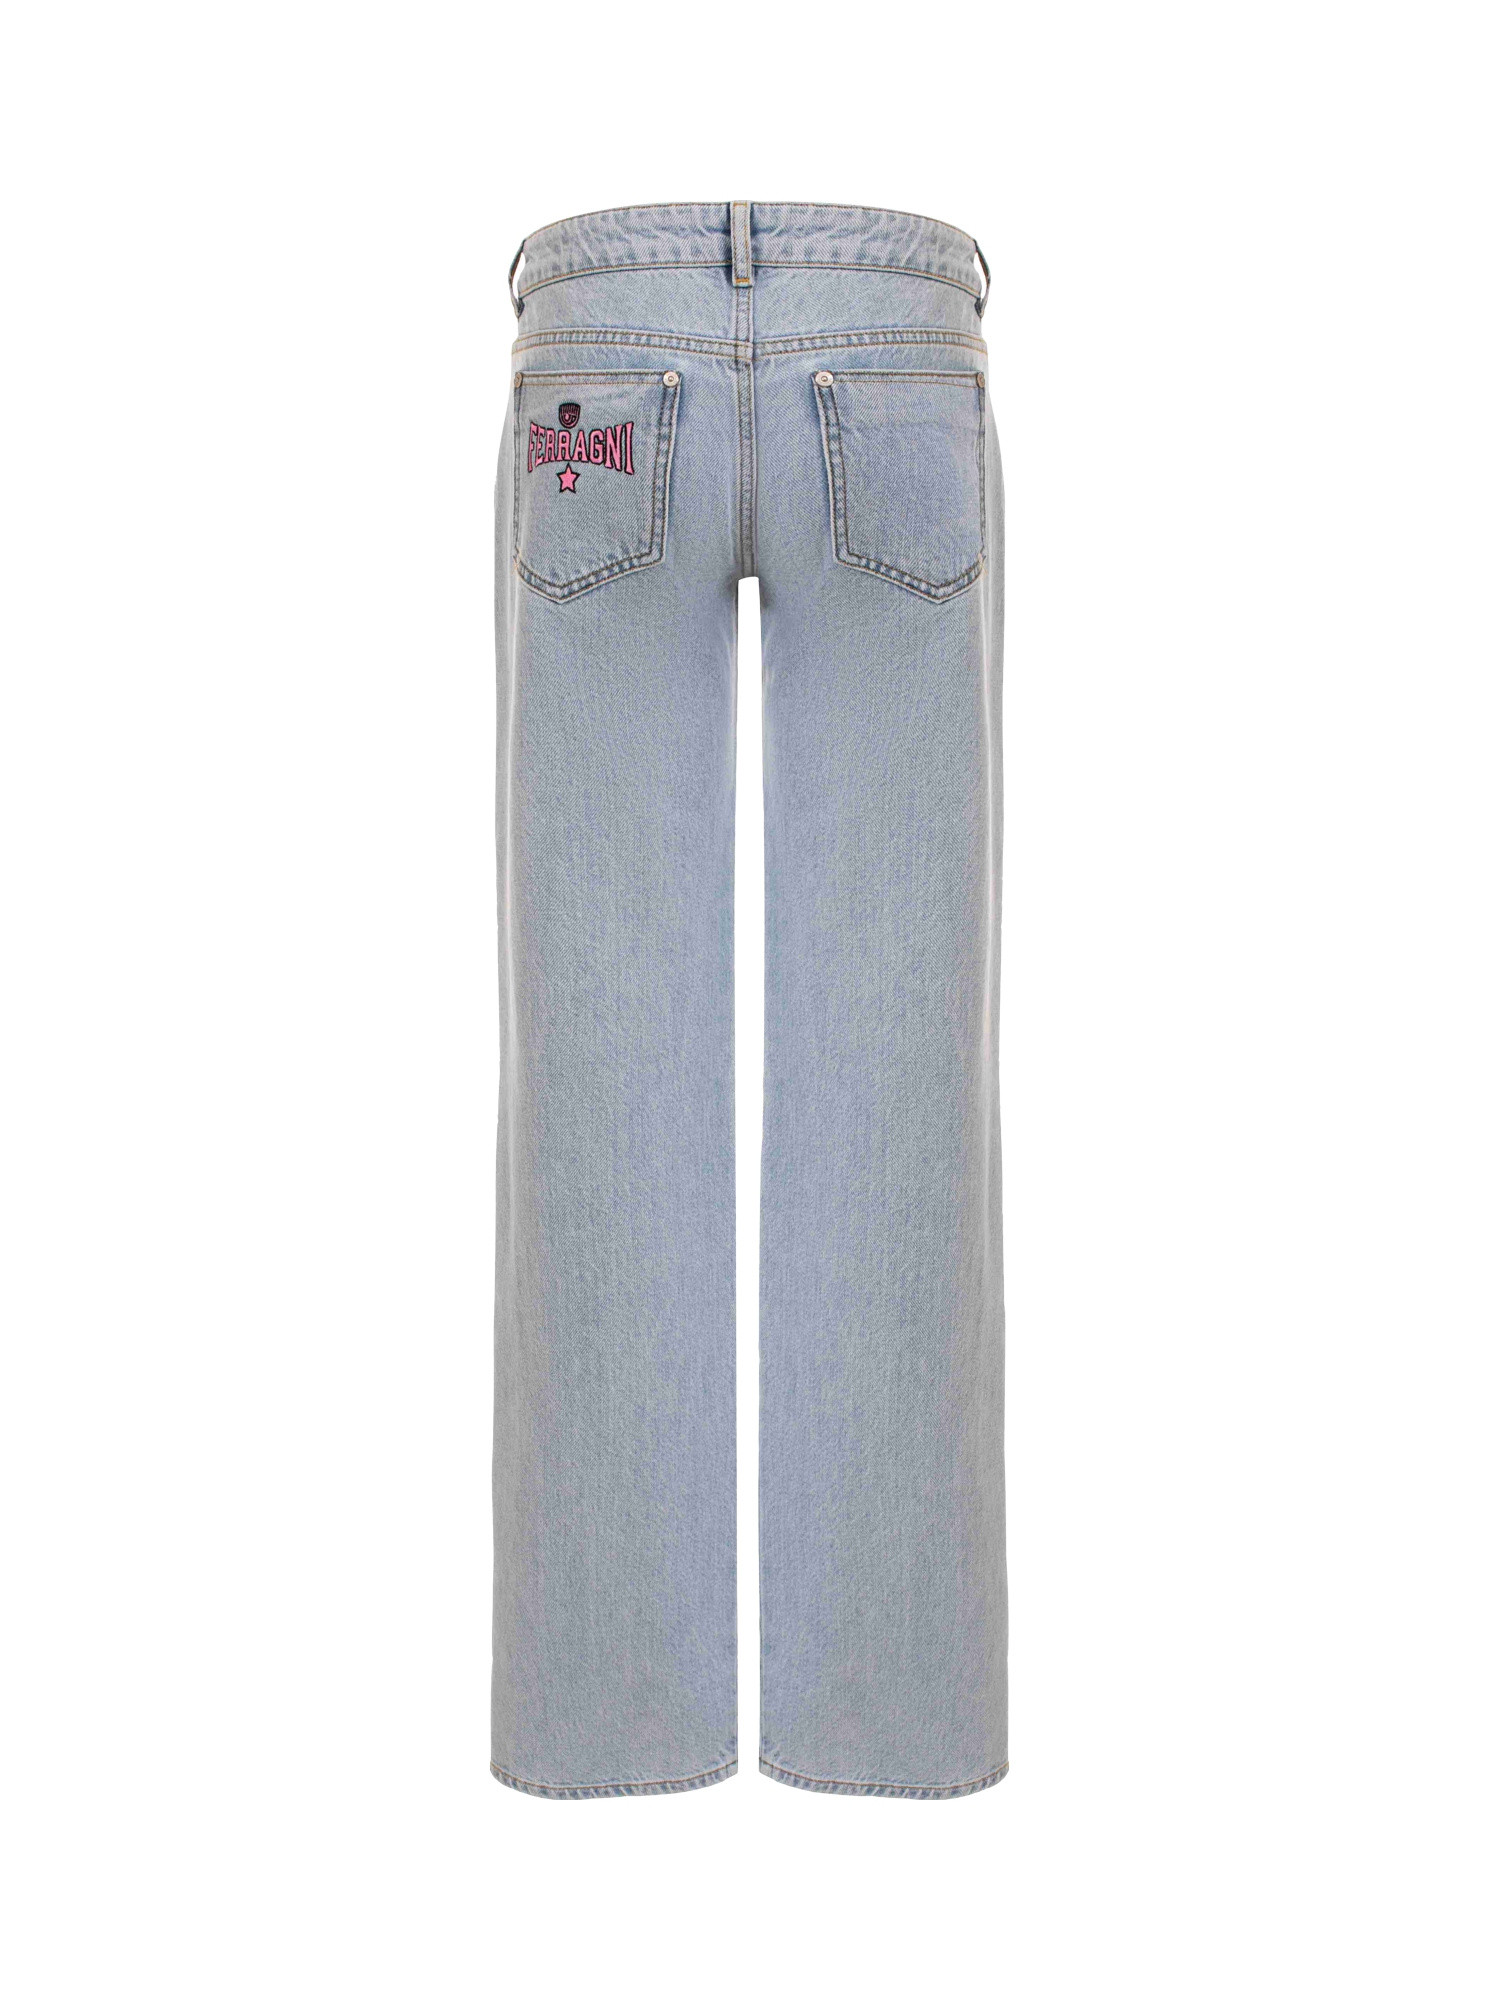 Chiara Ferragni - Low waist 5-pocket jeans, Denim, large image number 1